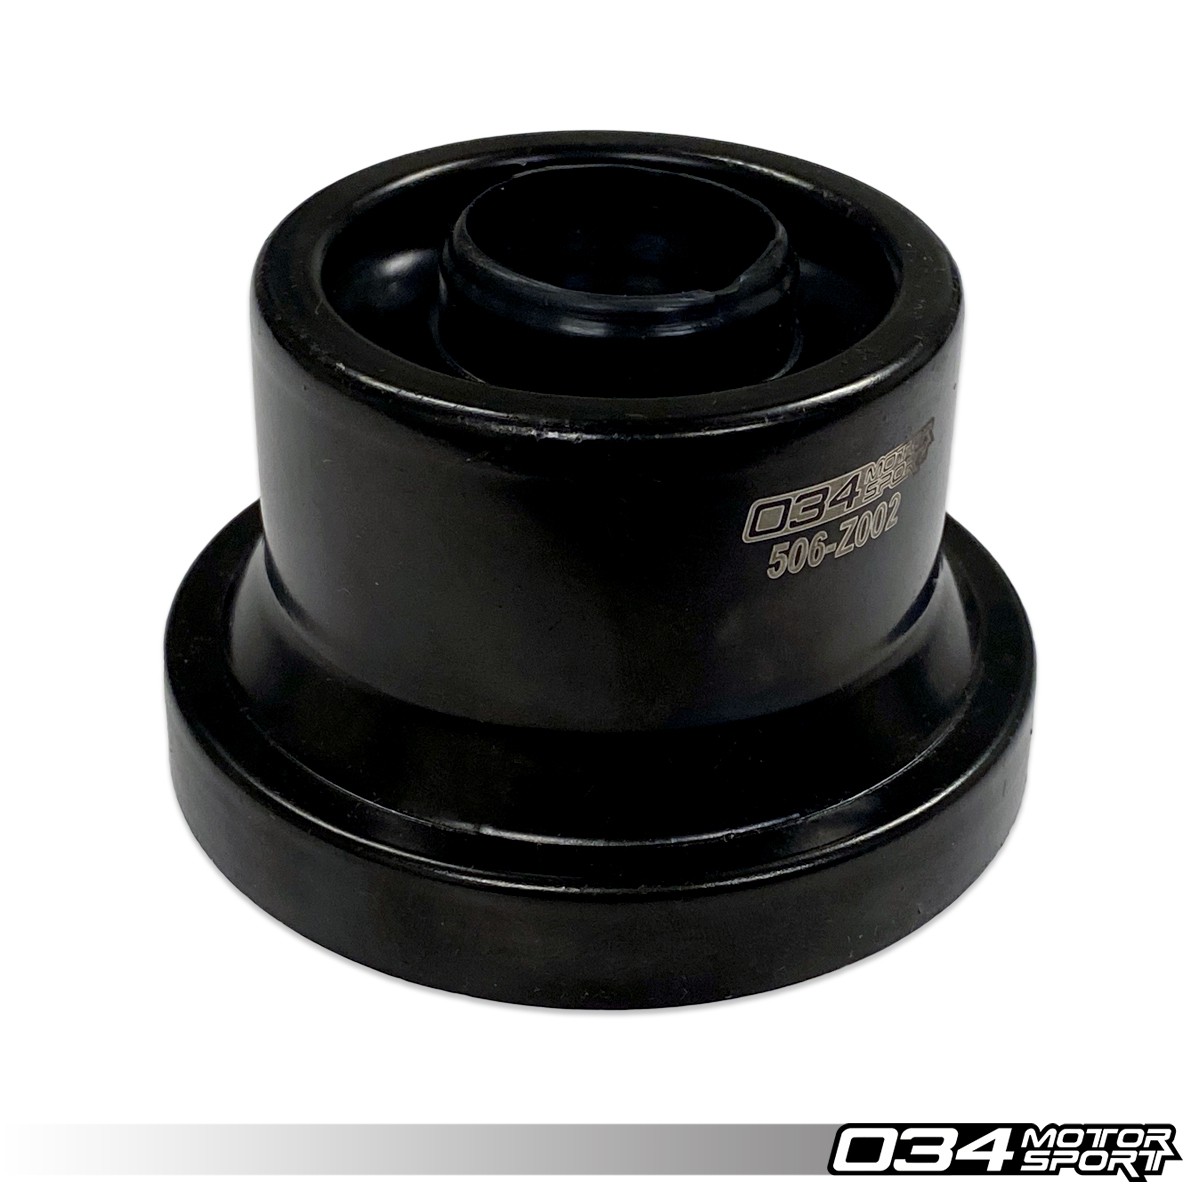 Driveshaft Center Support Bearing Boot, B7 RS4 034-506-Z002